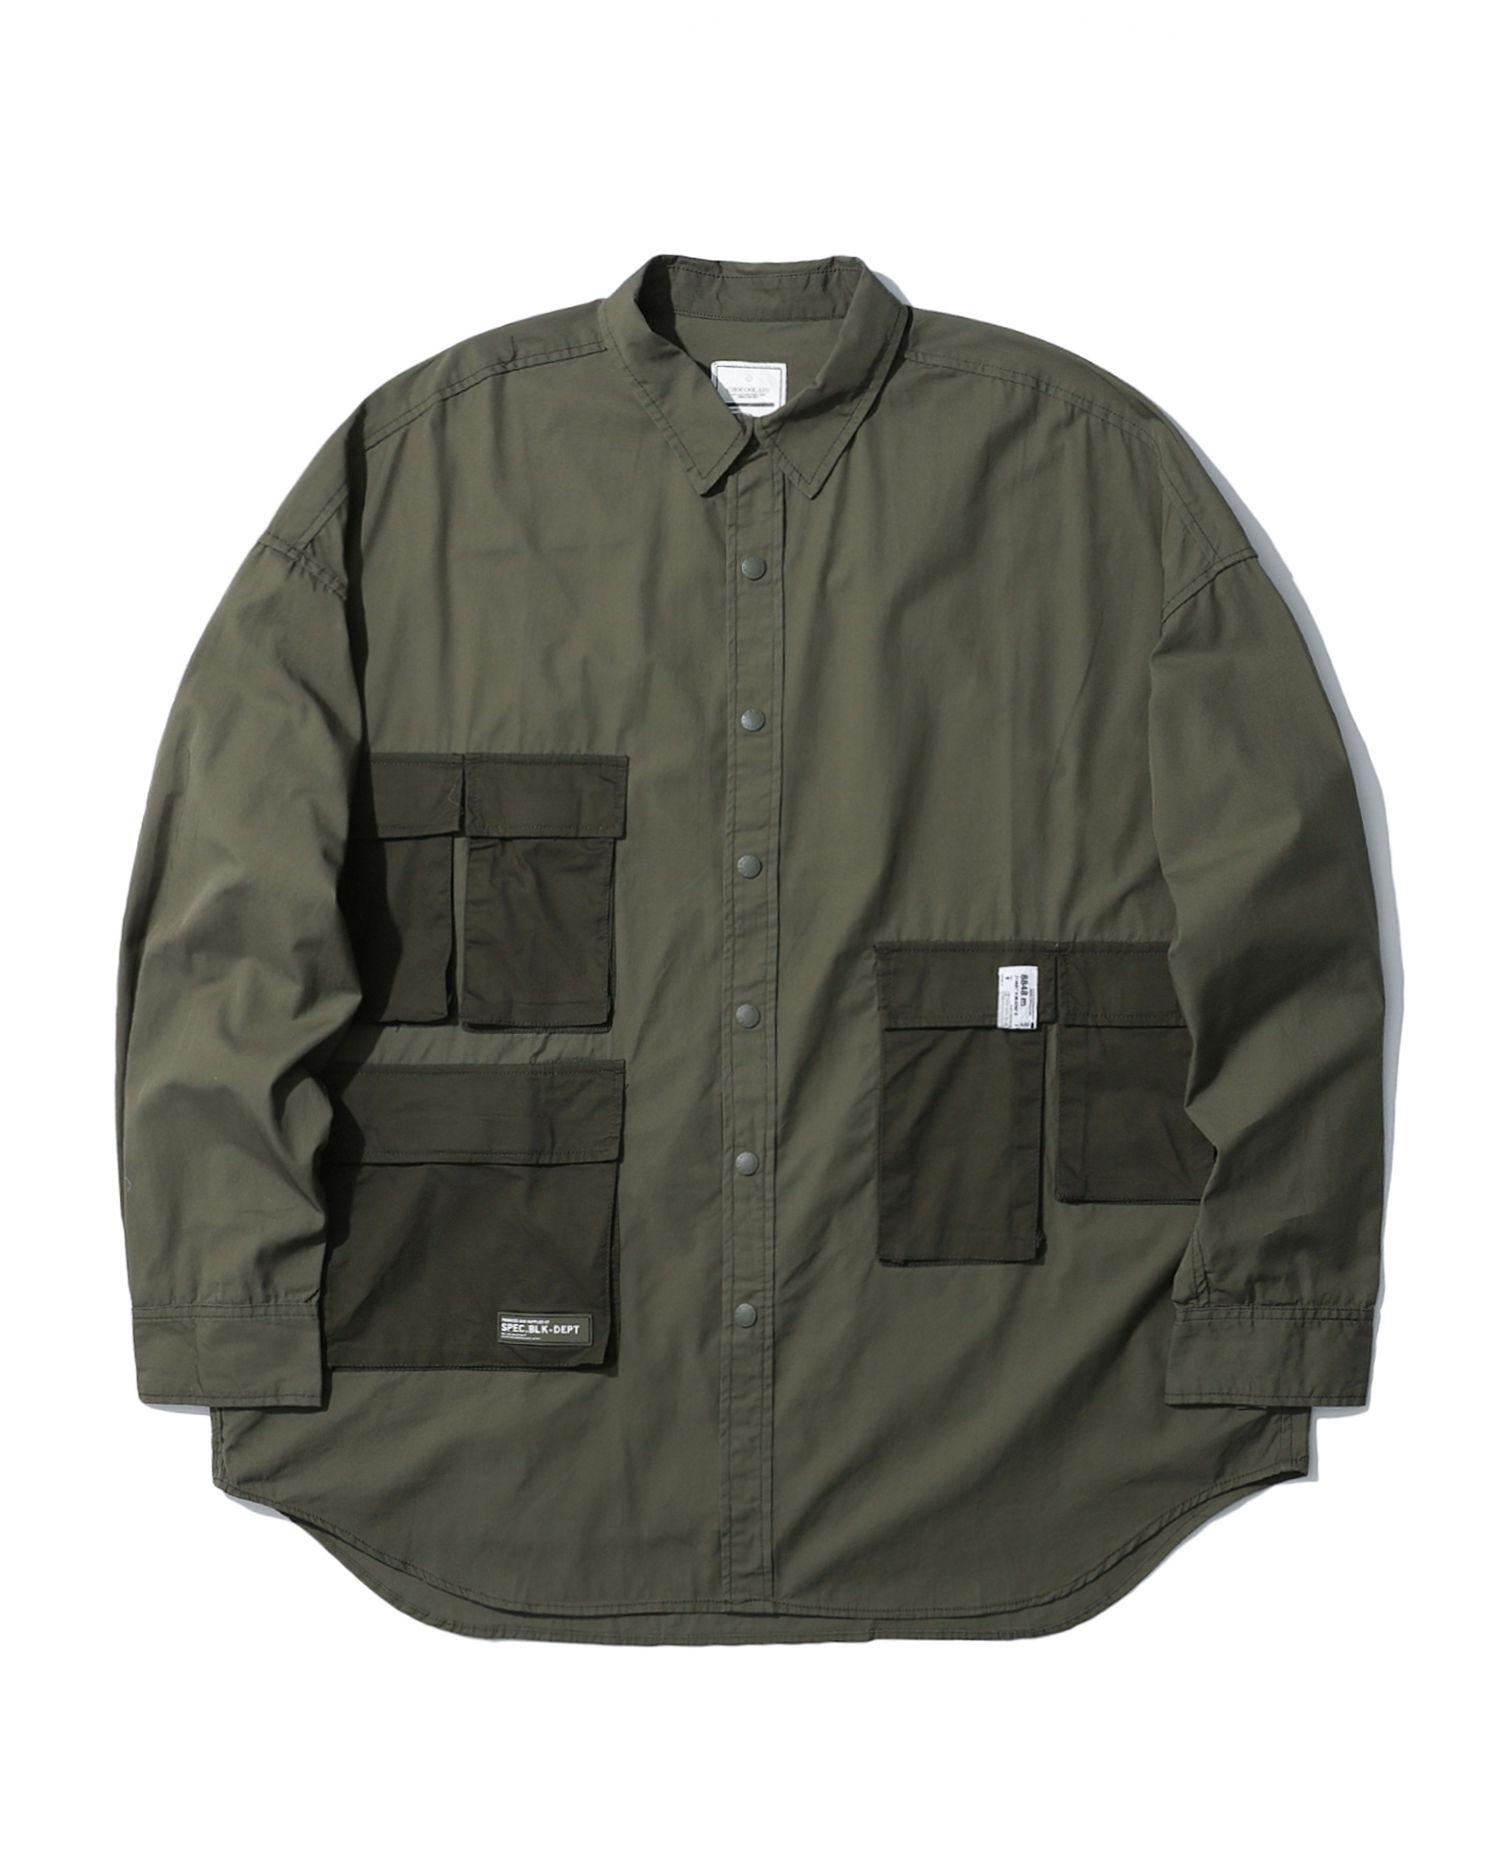 Army cargo jacket by :CHOCOOLATE